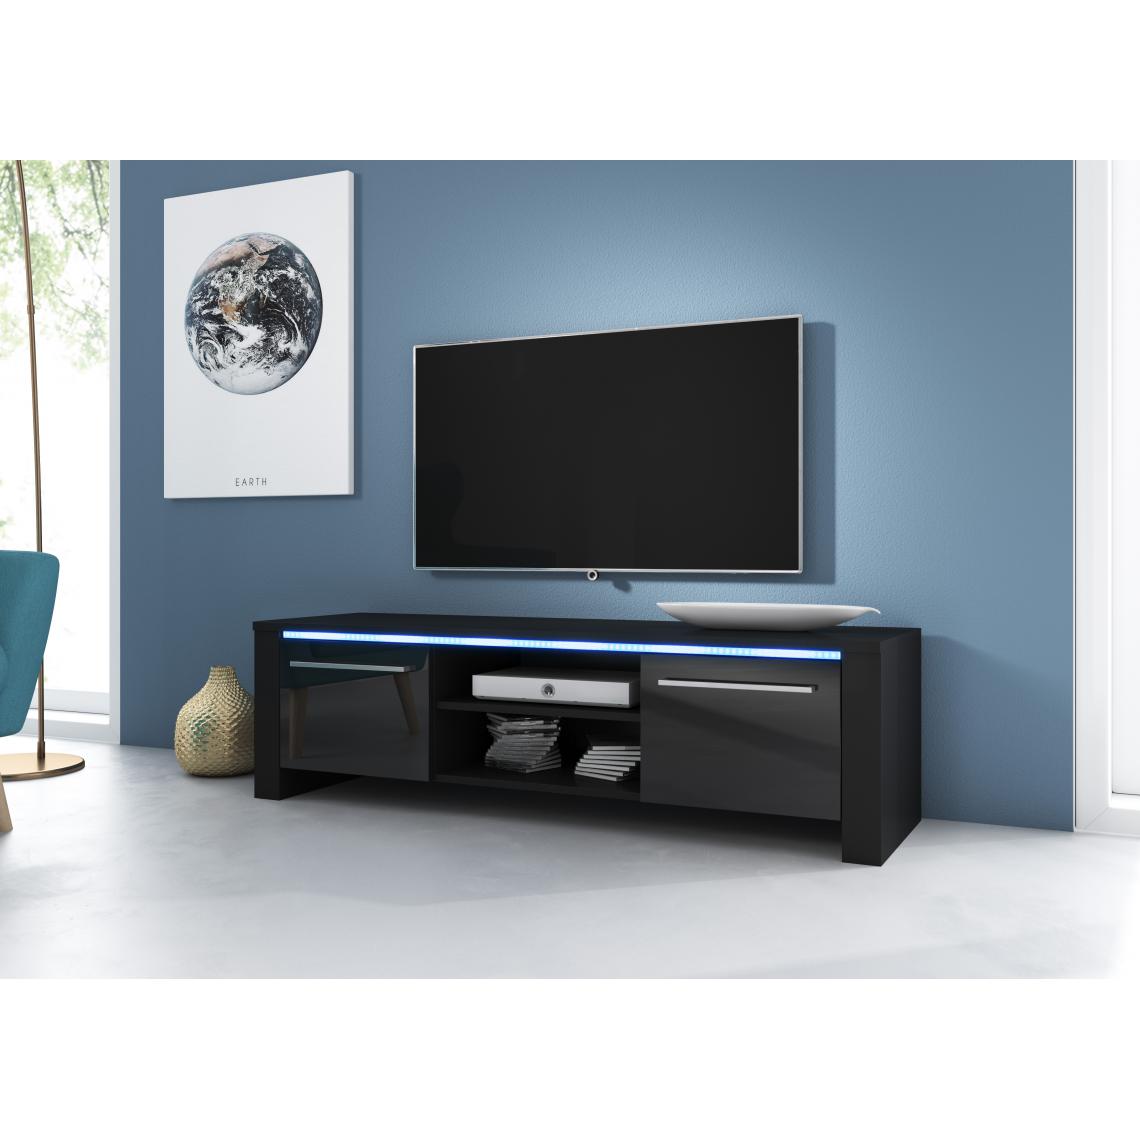 3xeliving - Moderner TV-Ständer Canaris weiß / grau glänzend 140cm LED - Meubles TV, Hi-Fi